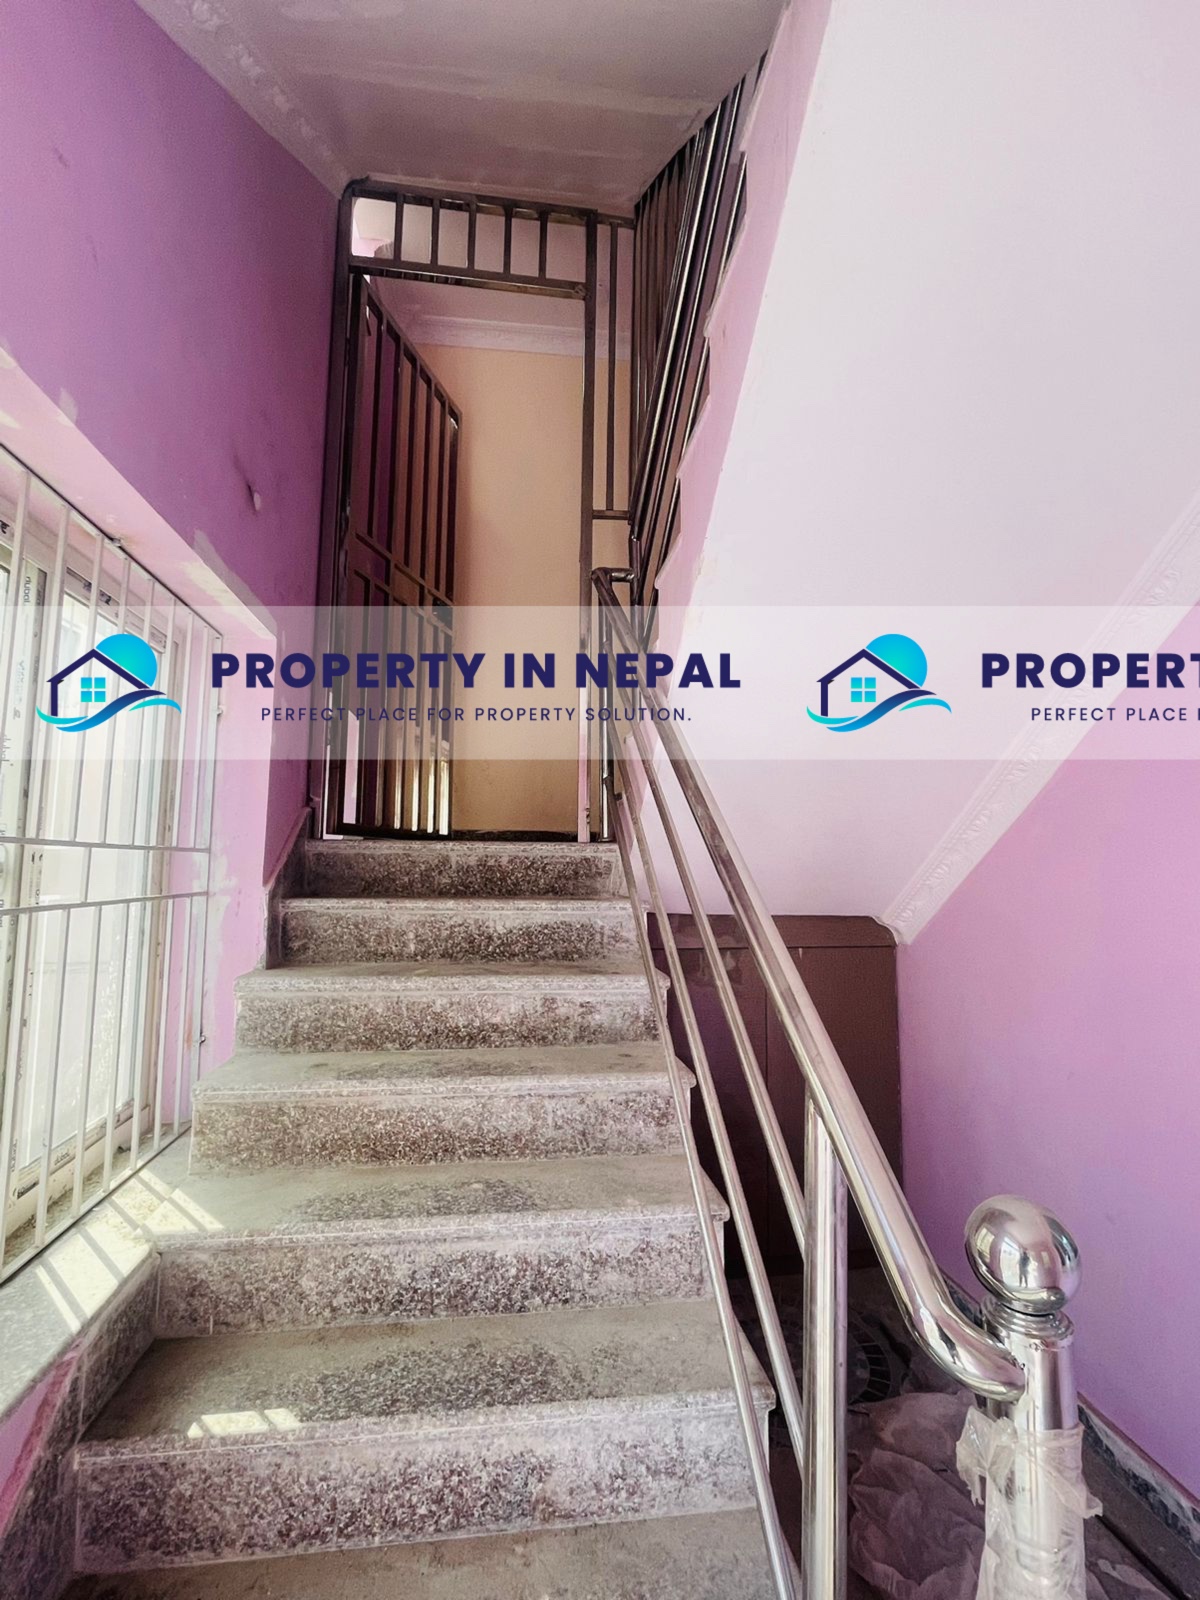 property-image